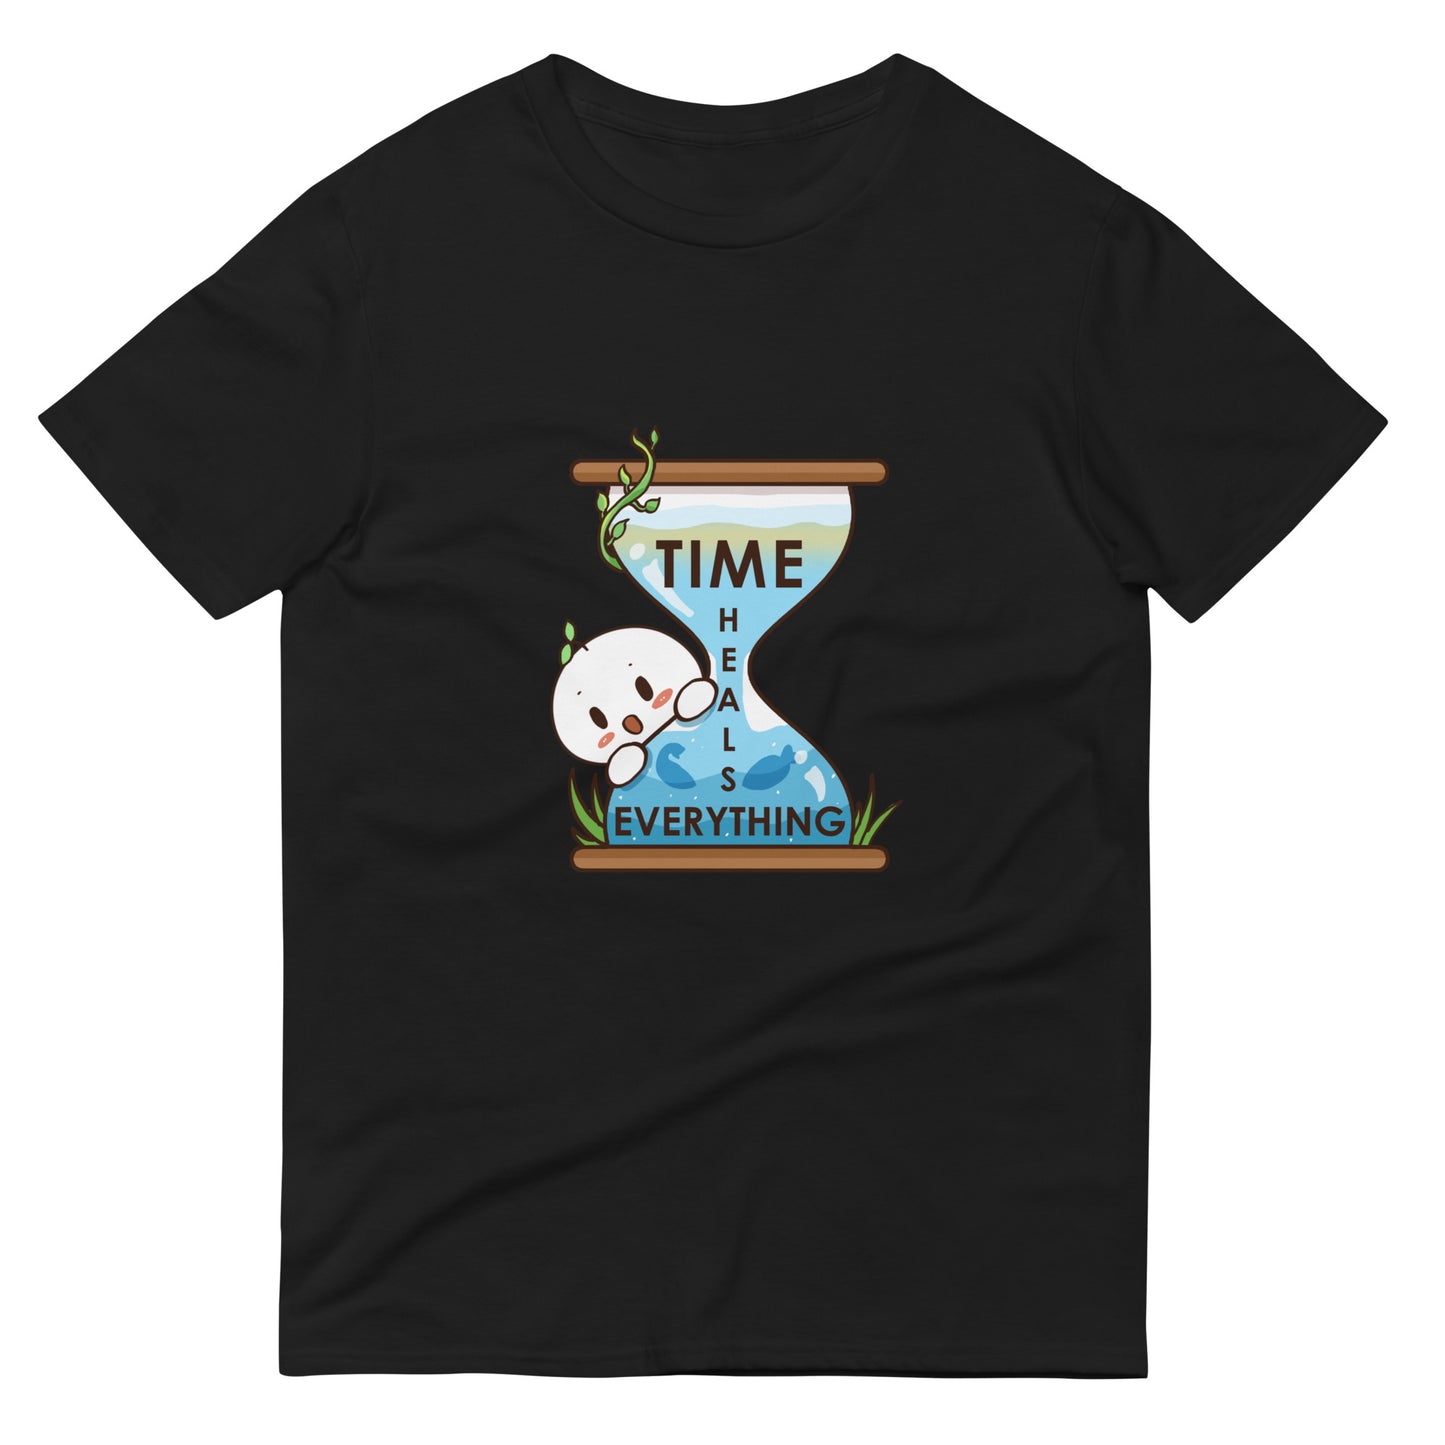 Time Heals Everything Short-Sleeve T-Shirt